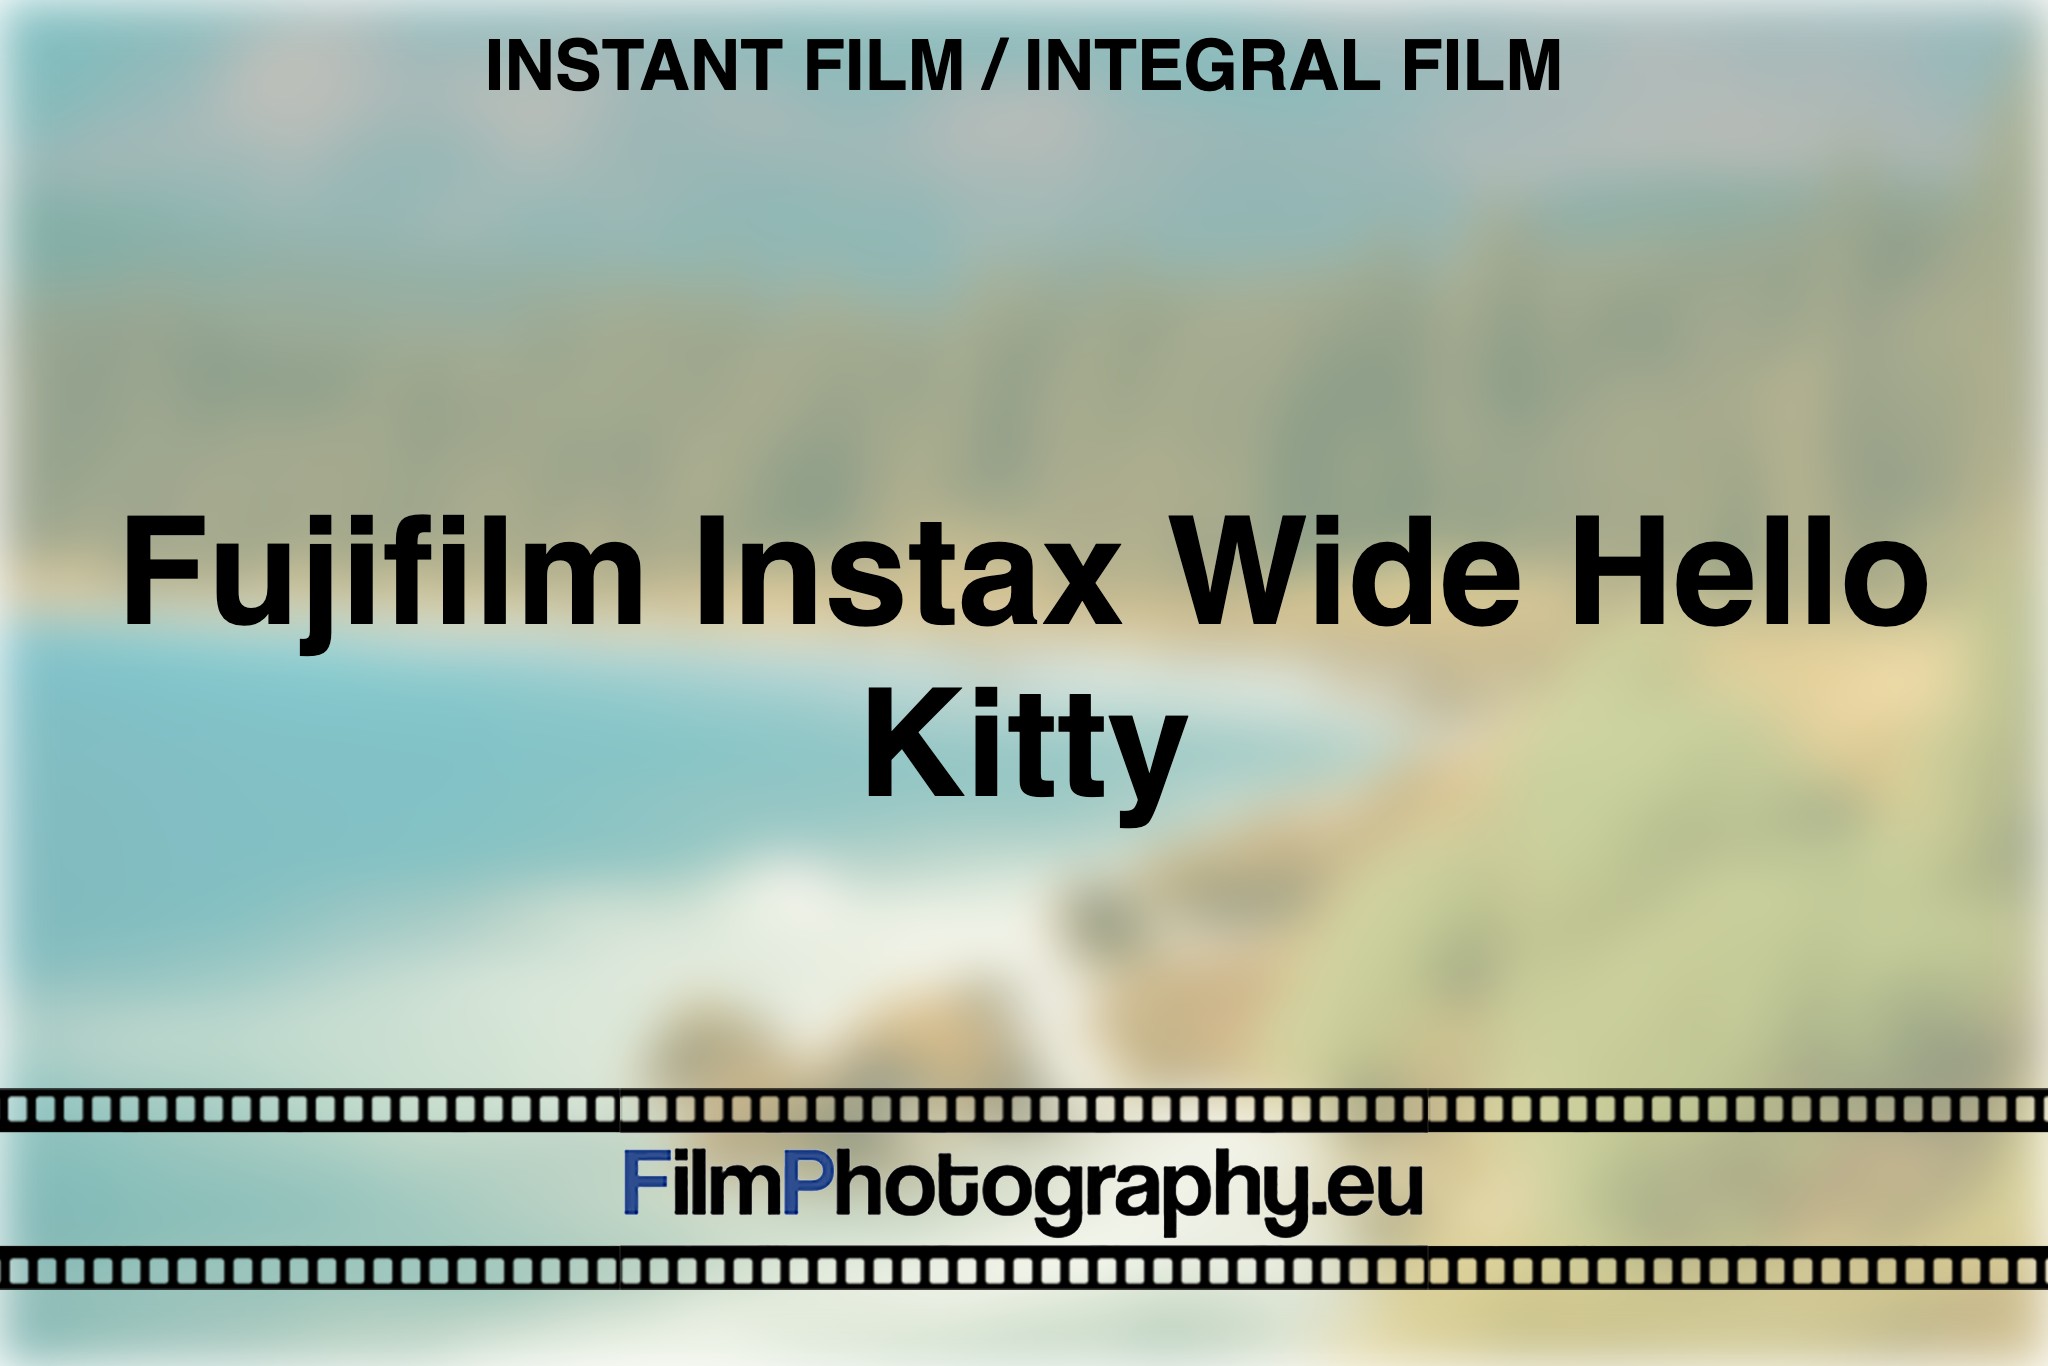 fujifilm-instax-wide-hello-kitty-instant-film-integral-film-bnv